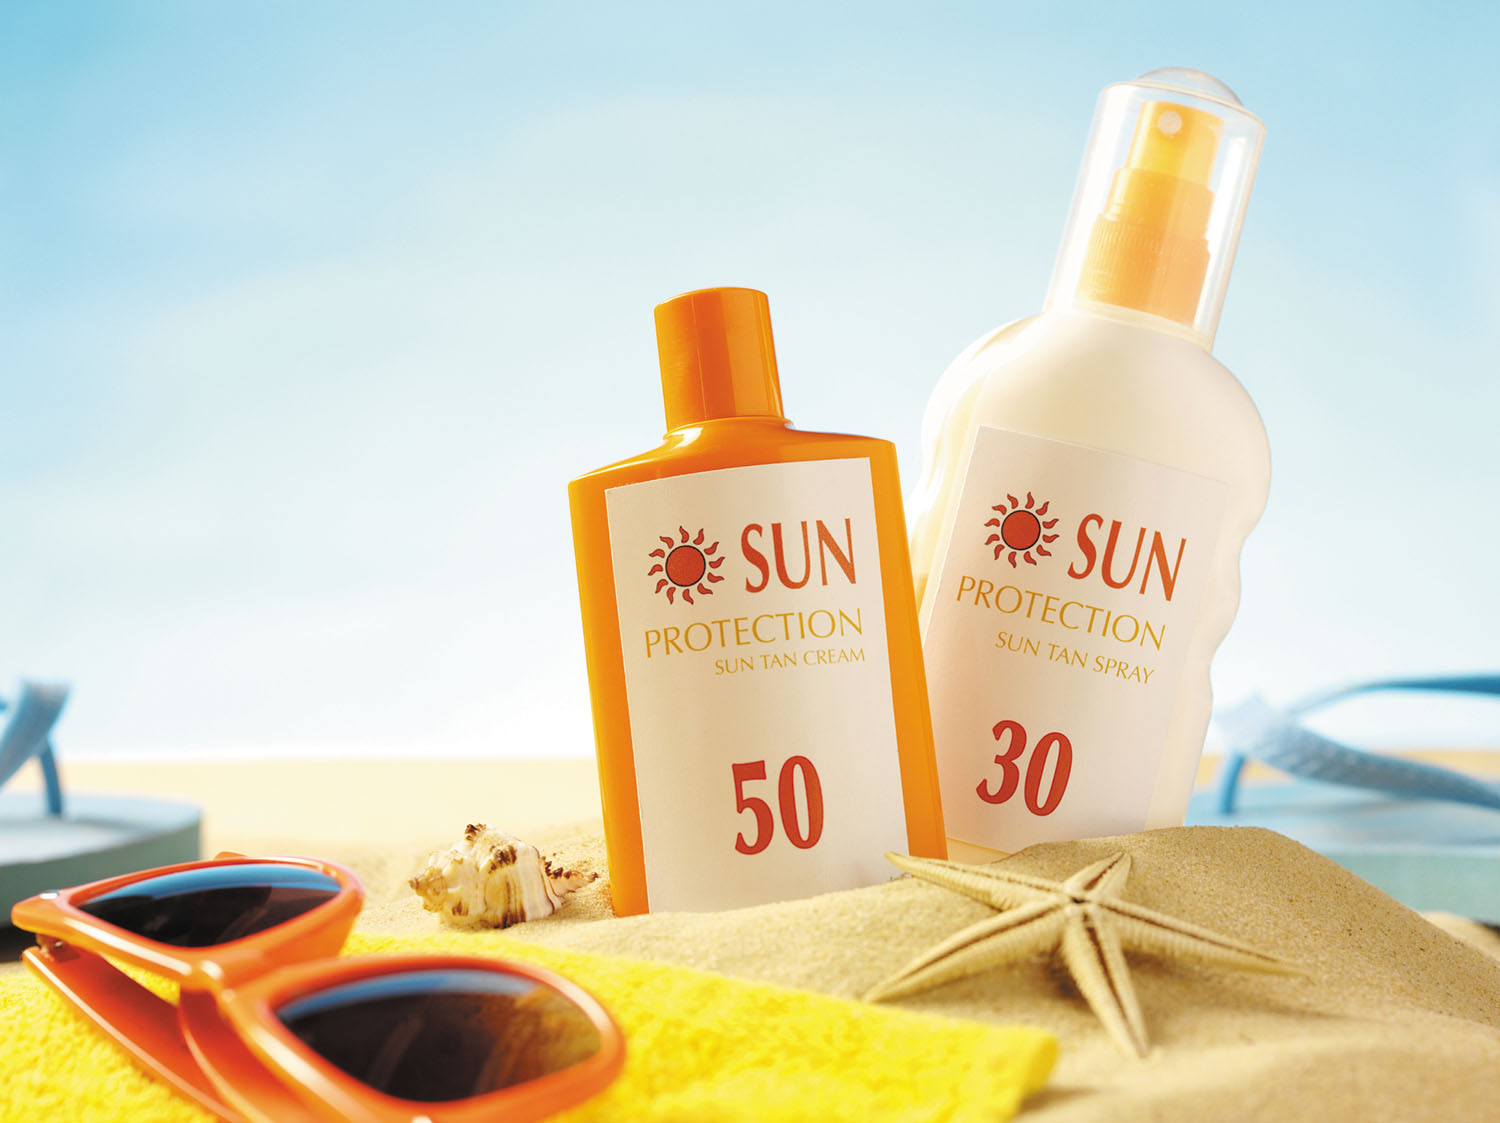 Sunscreen stimulate vasodilation of blood vessels